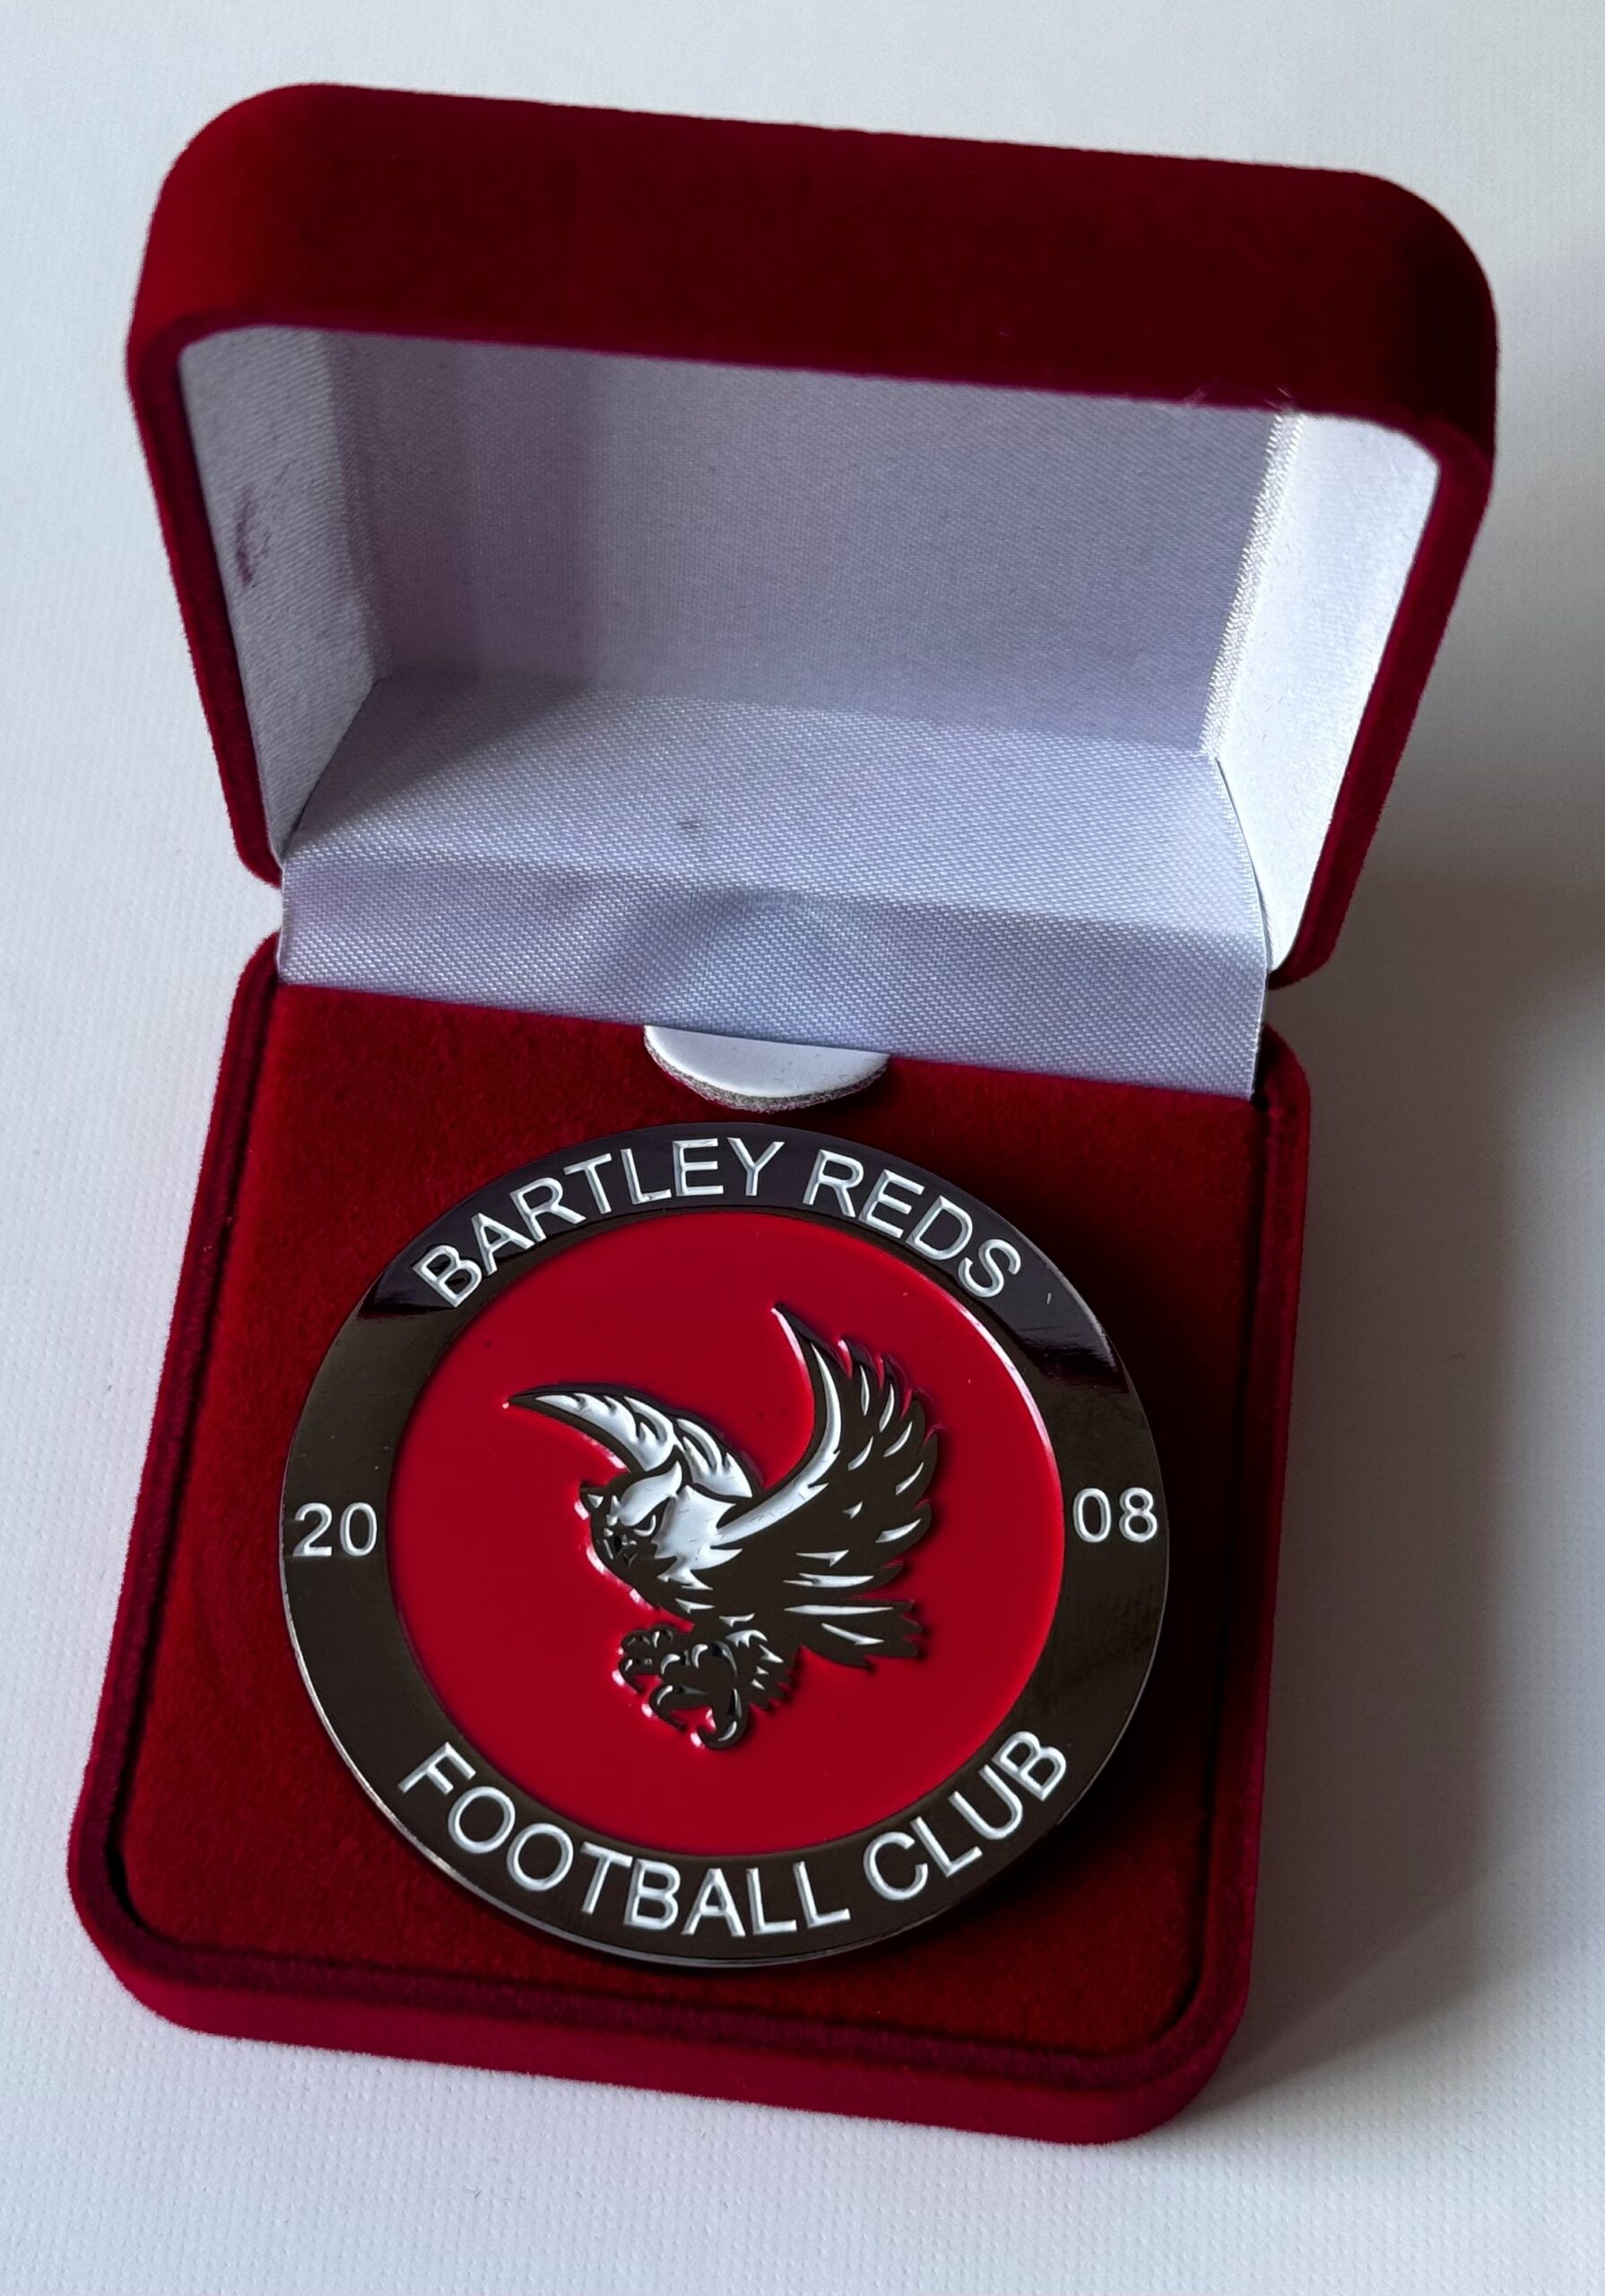 bartley reds football club medal